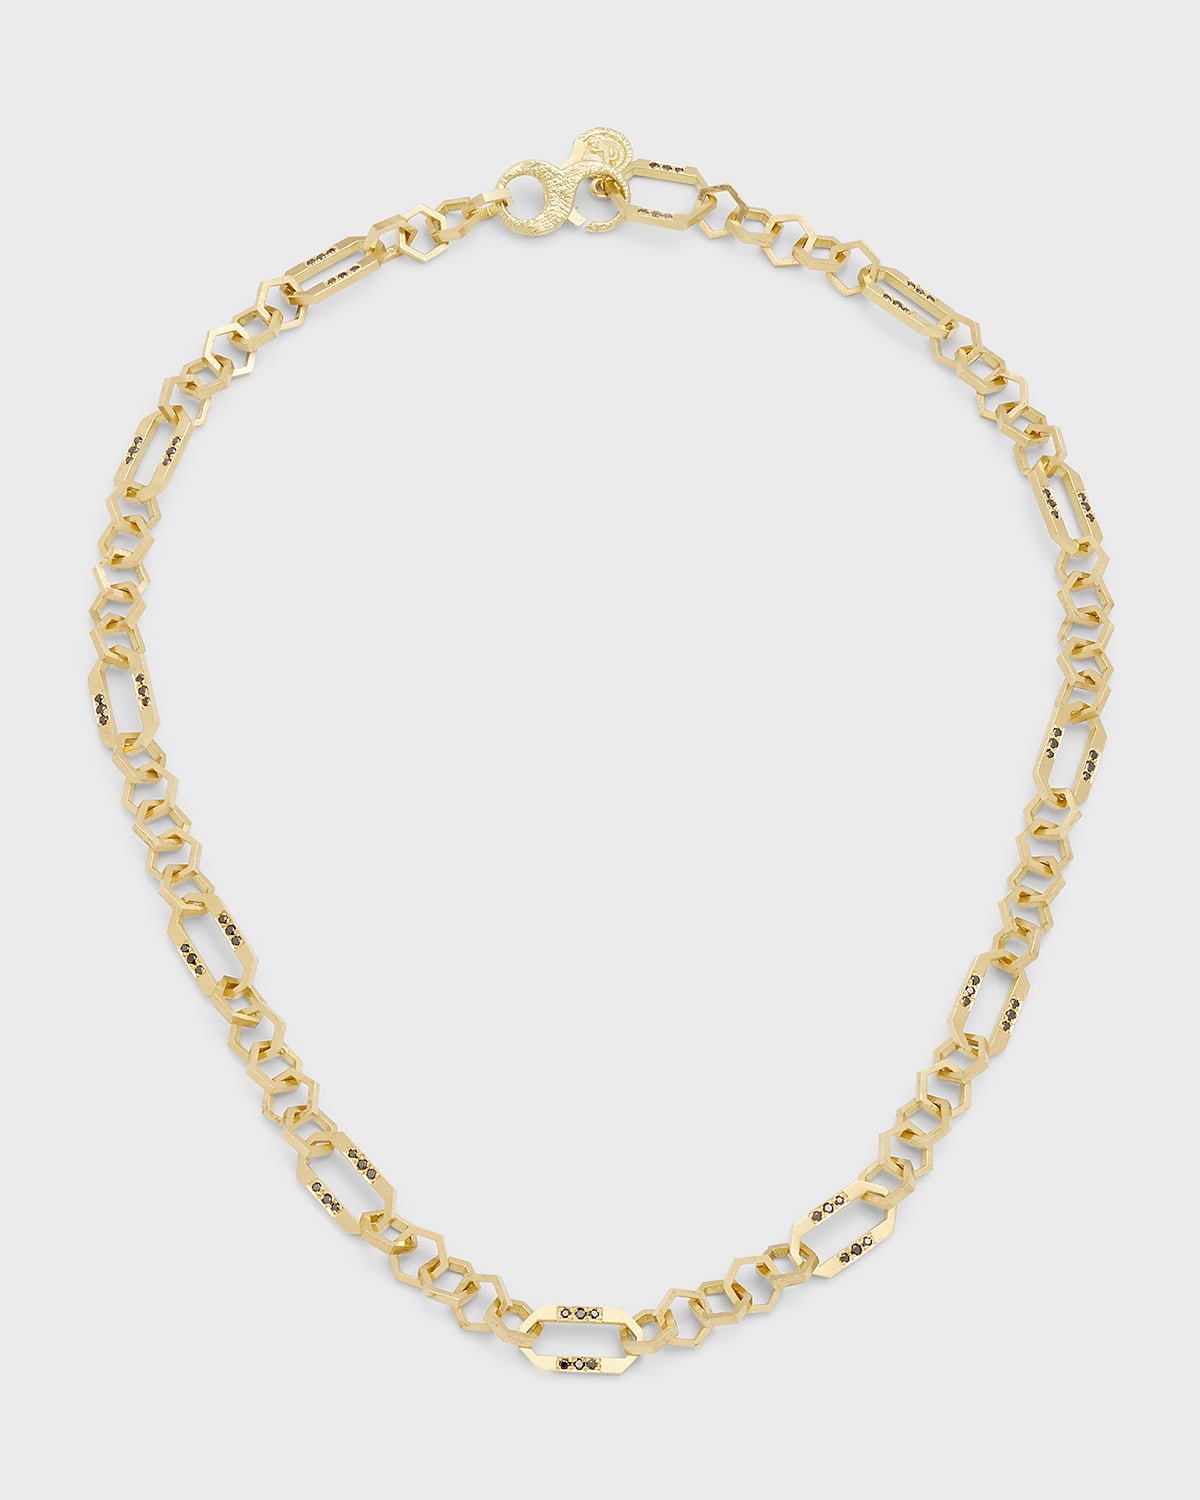 Dominique Cohen 18k Yellow Gold Timepiece Chain Necklace With Black Diamonds